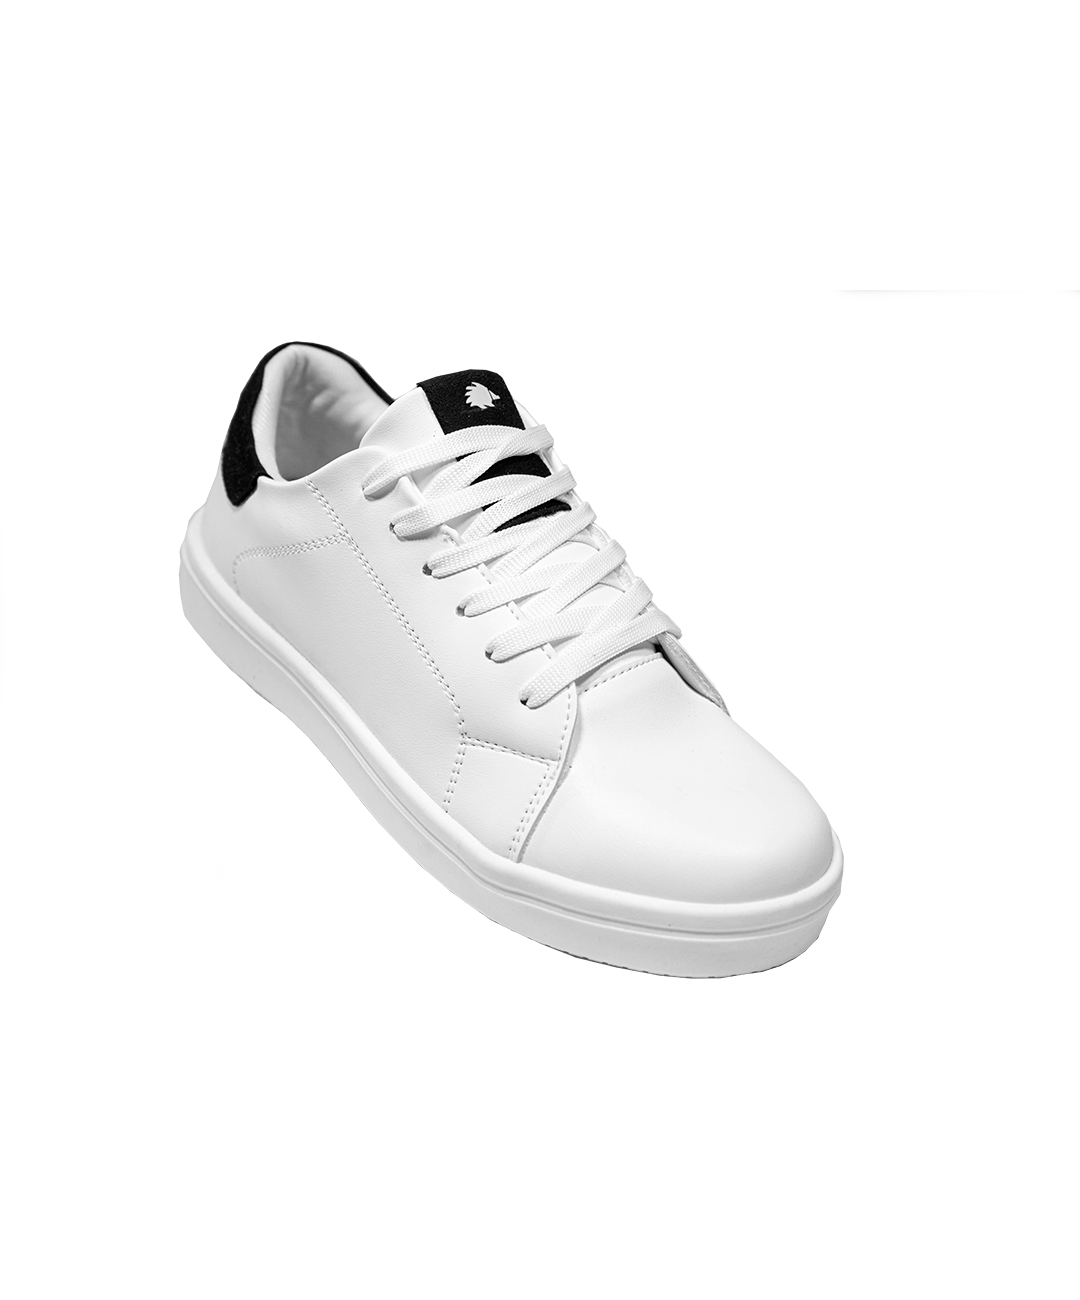 Zapato deportivo Blanco/Negro unisex - Hedgehog Brand